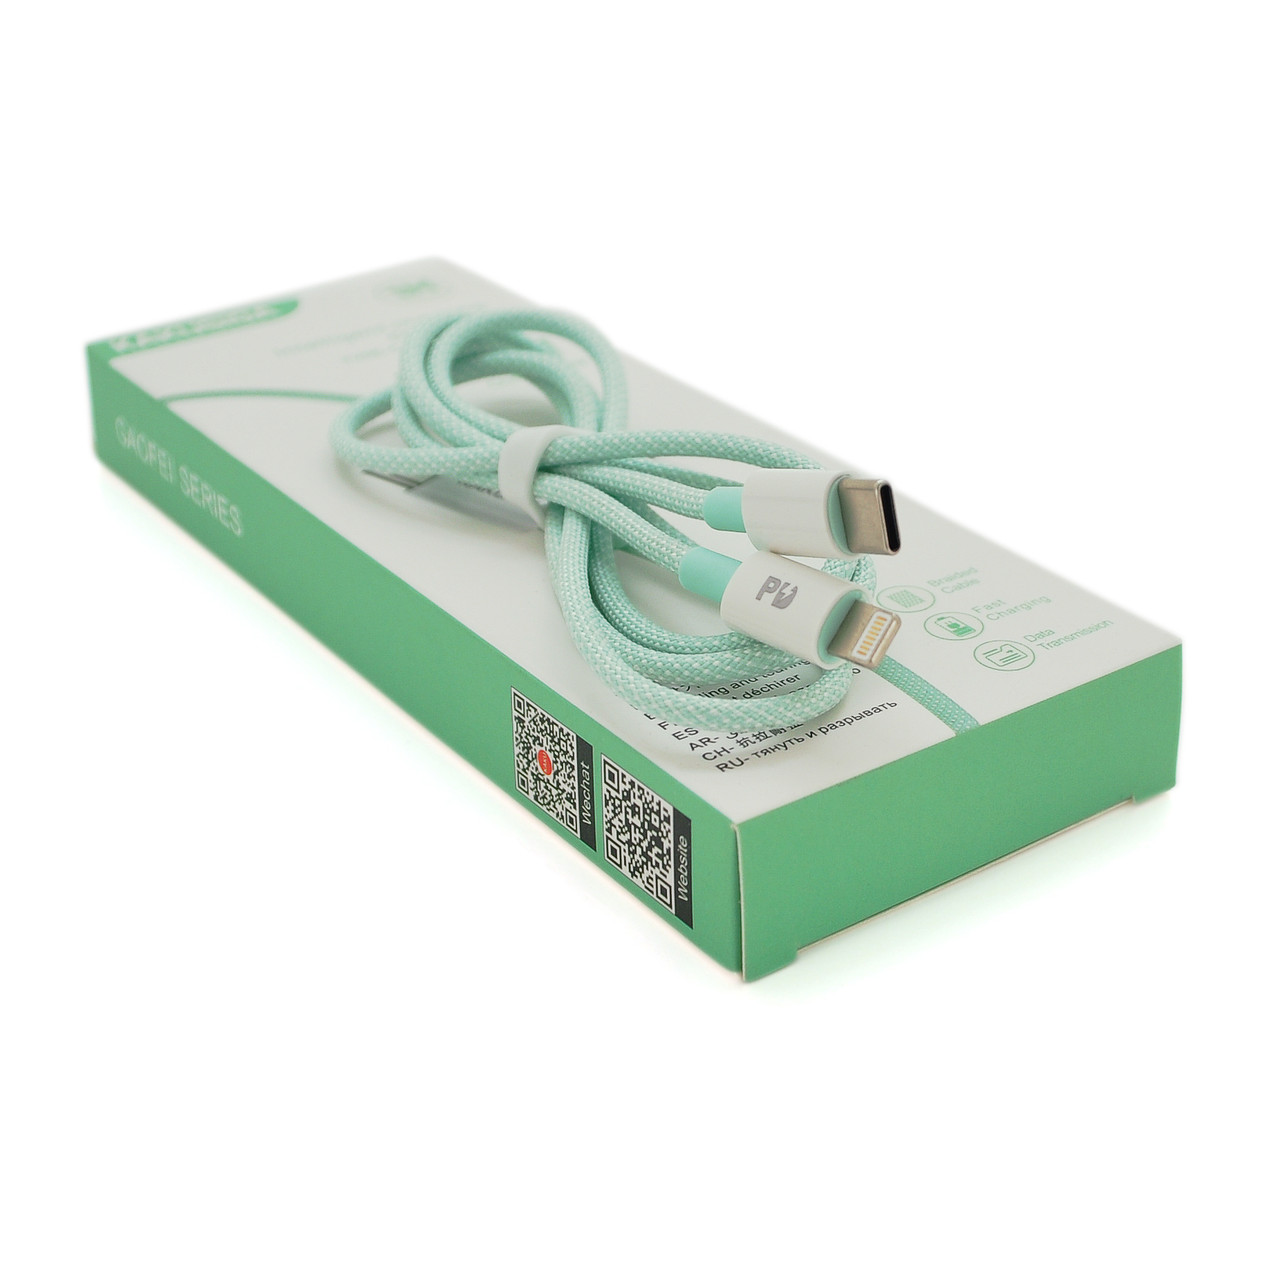 Кабель iKAKU KSC-723 GAOFEI PD60W smart fast charging cable (Type-C to Lightning), Green, длина 1м, BOX